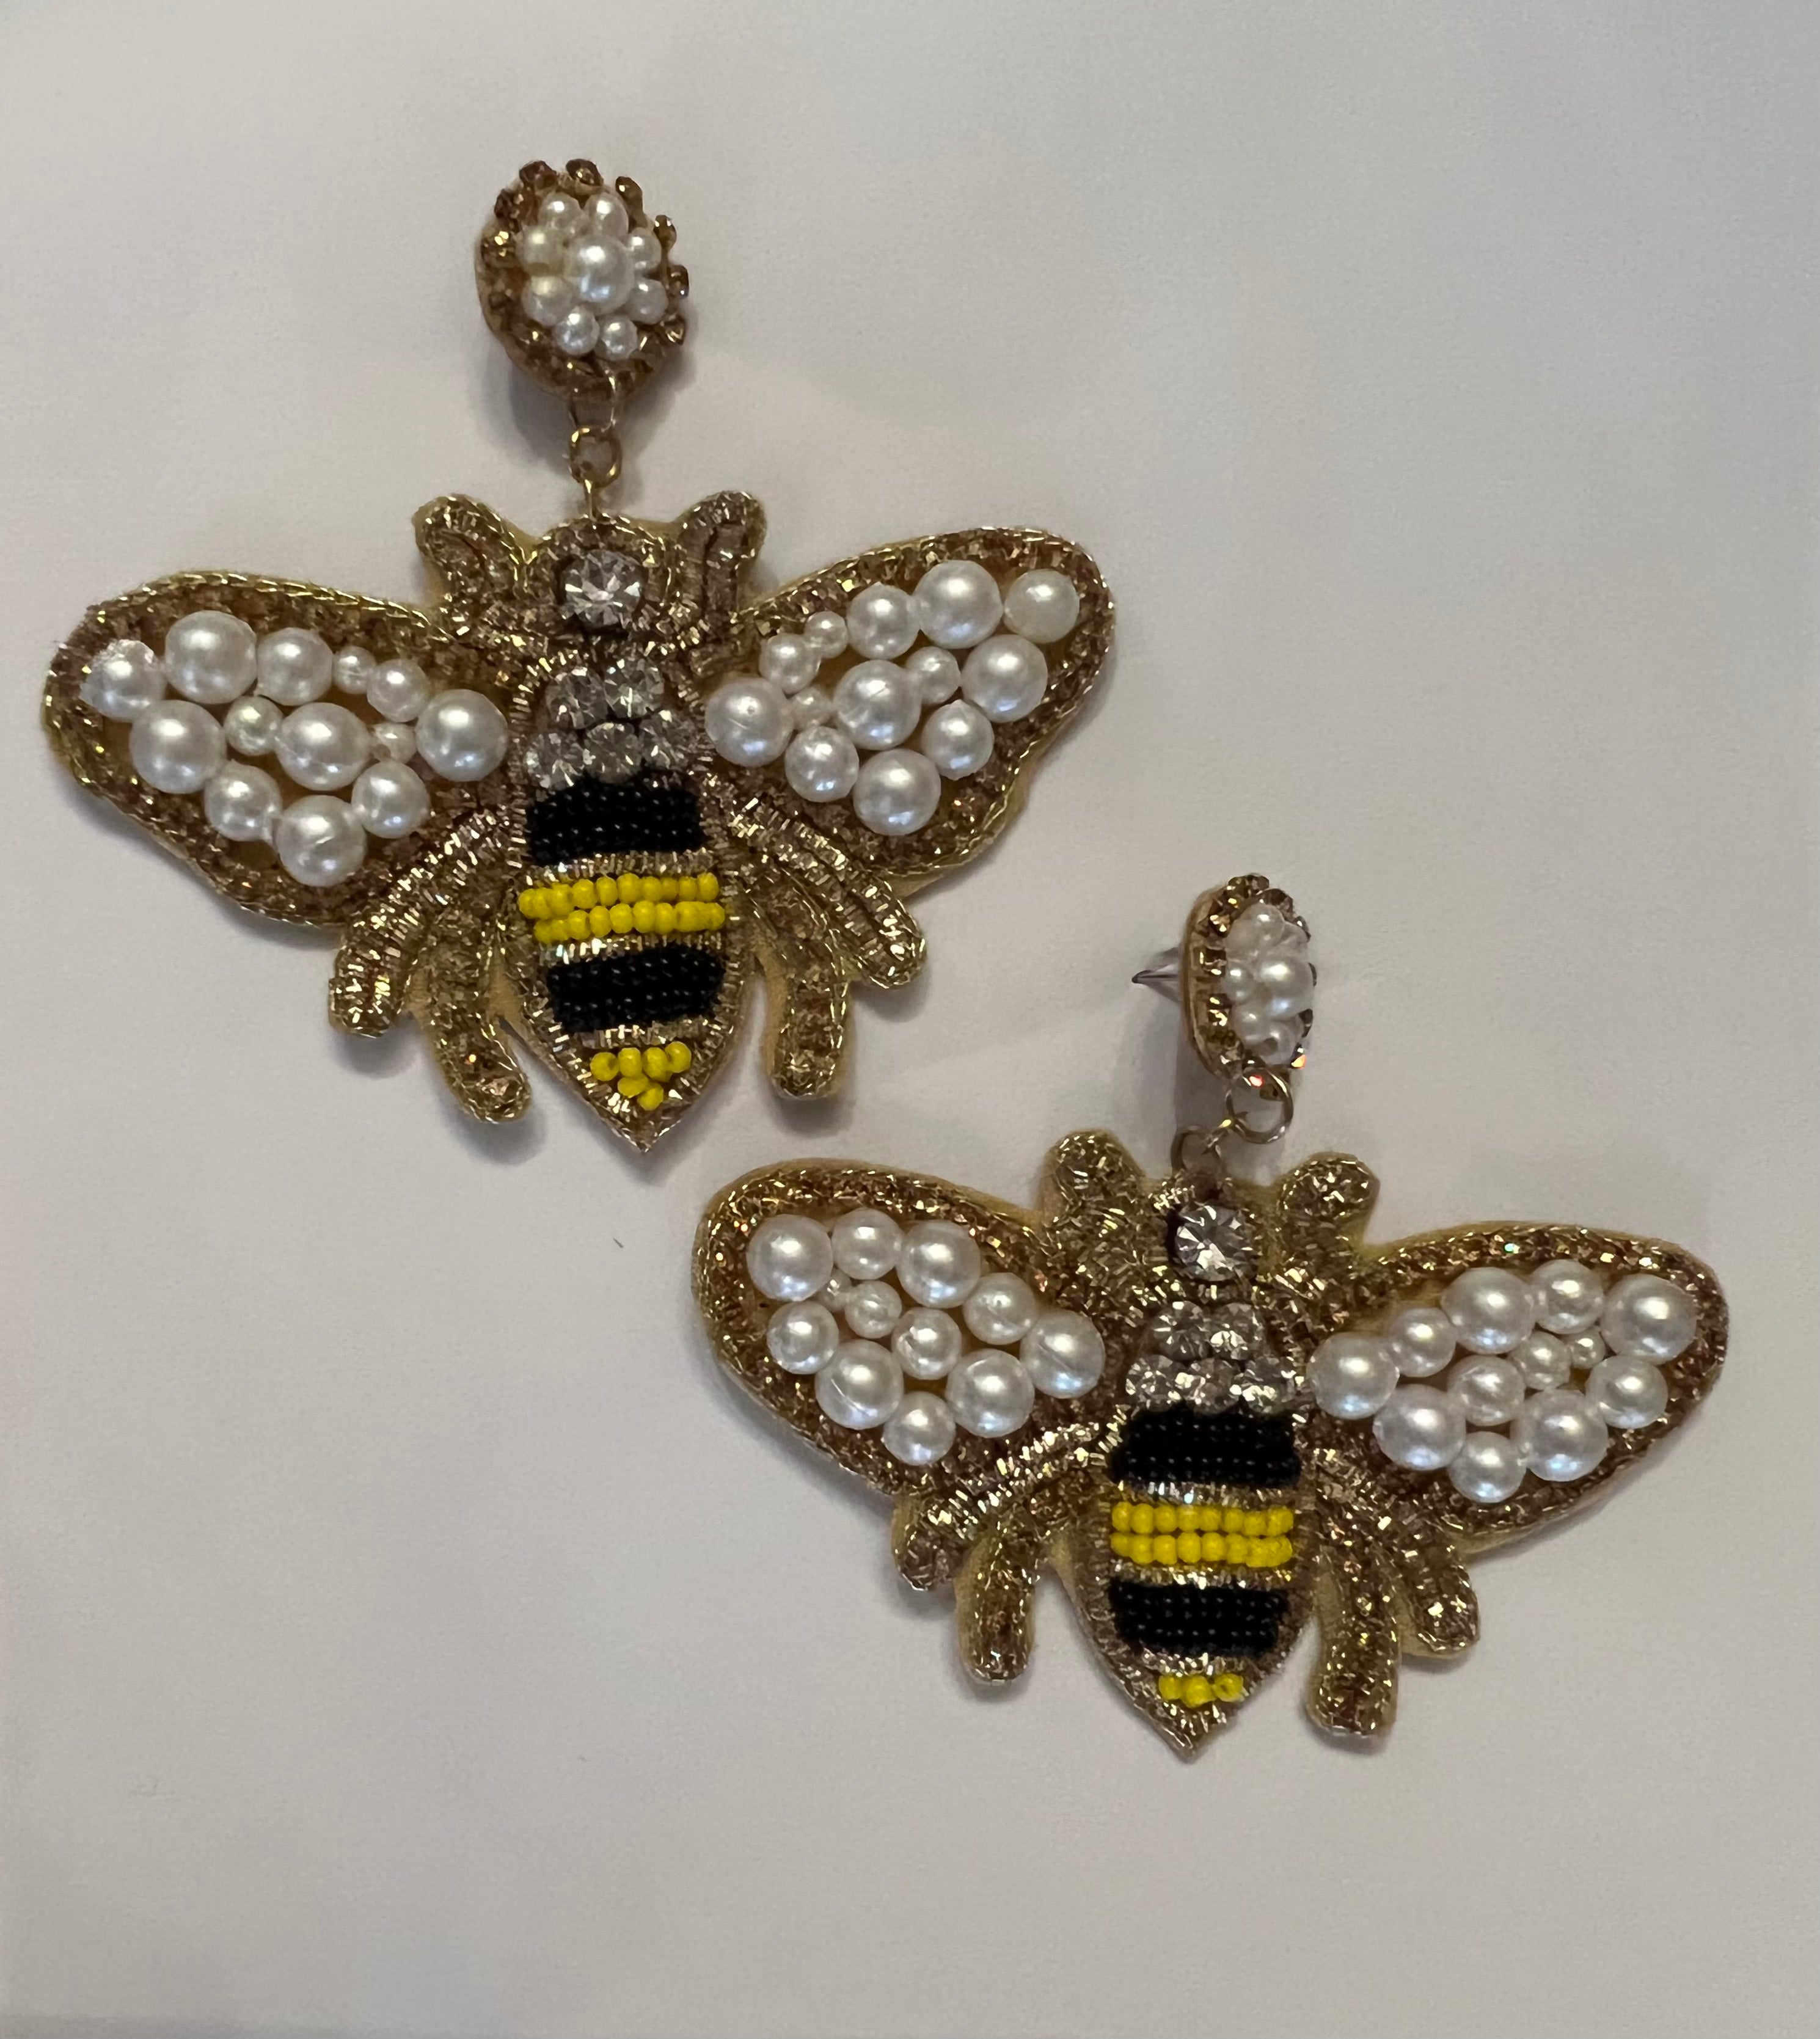 Beaded Bee Earrings